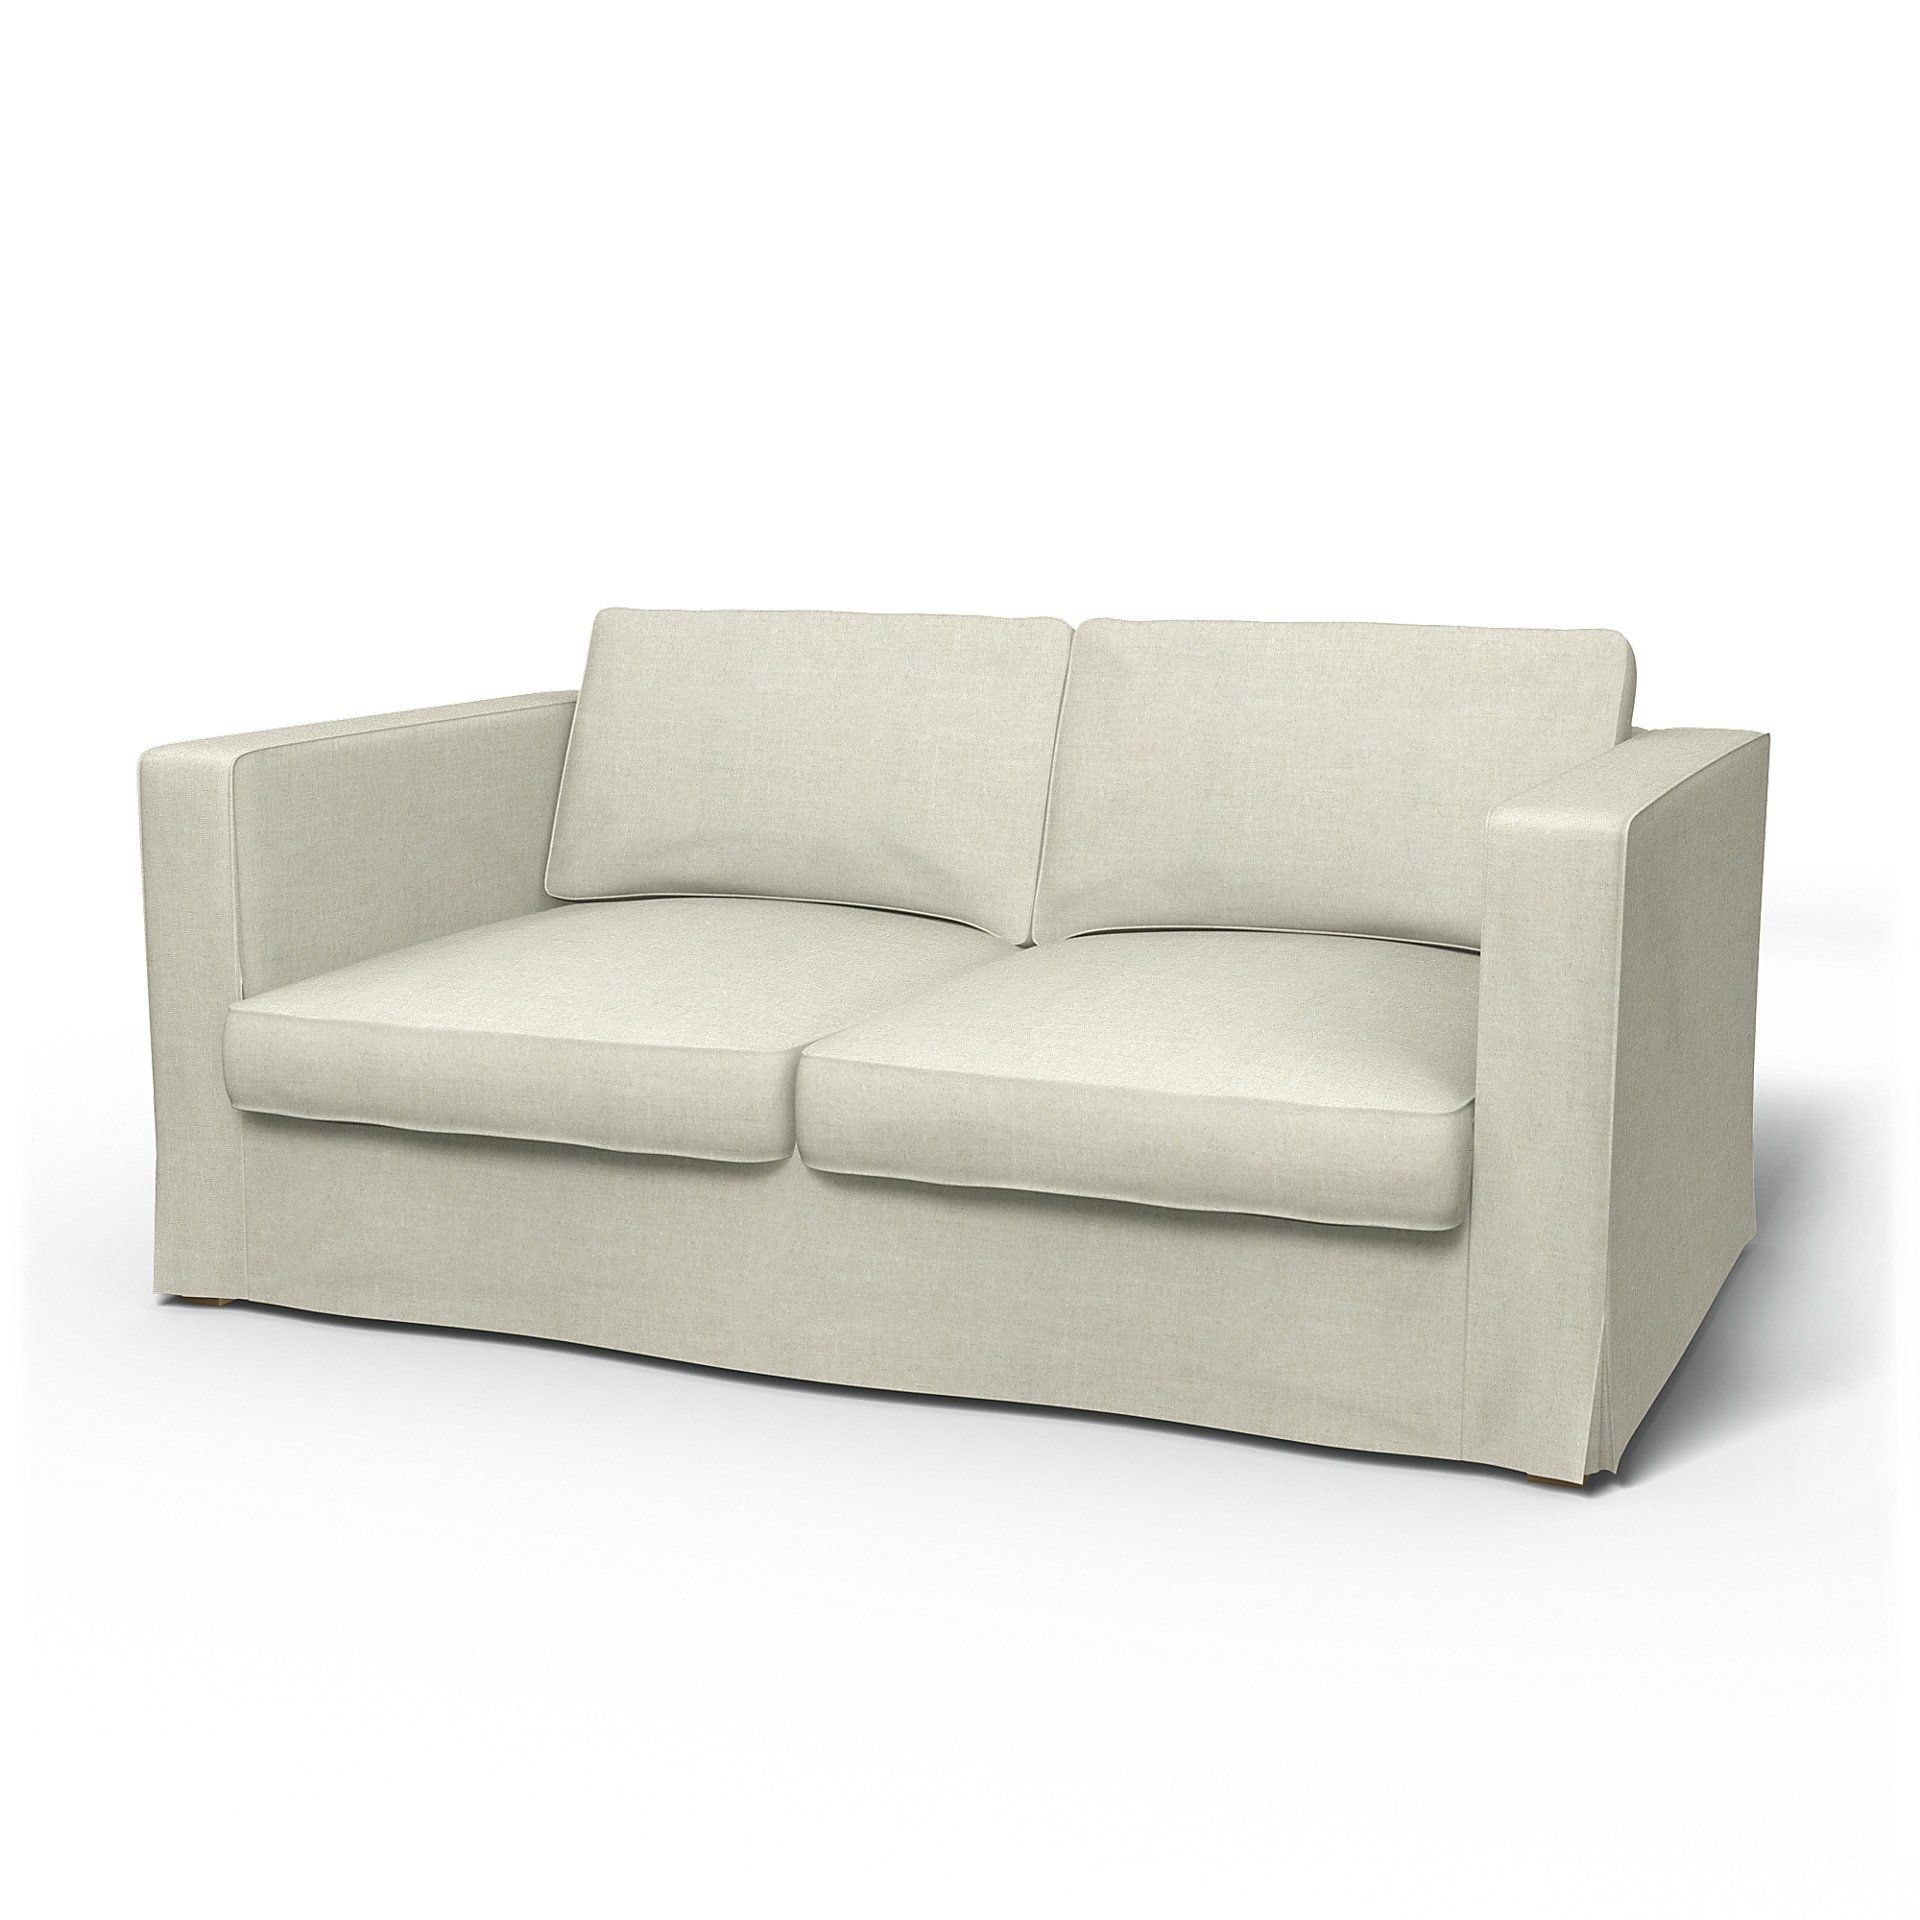 IKEA - Karlstad 2 Seater Sofa Cover, Natural, Linen - Bemz